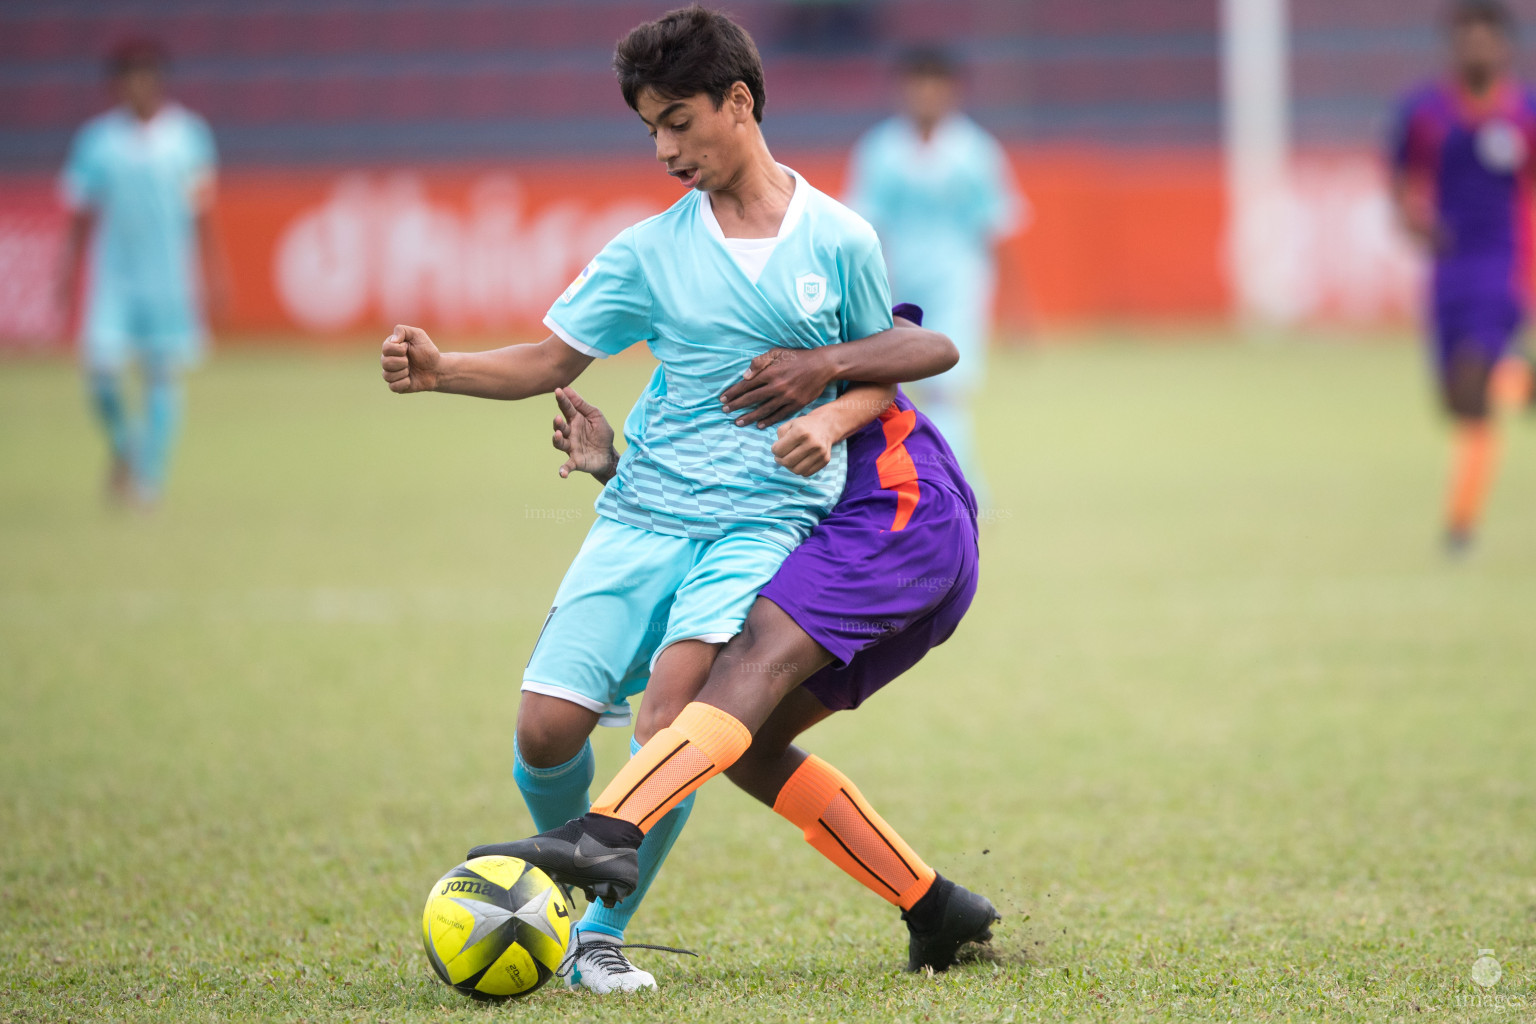 Ghiyasuddin School vs Resend School in Mamen Inter-School Football Tournament 2019 (U15) on 28th February 2019, Monday in Male' Maldives (Images.mv Photo: Suadh Abdul Sattar)